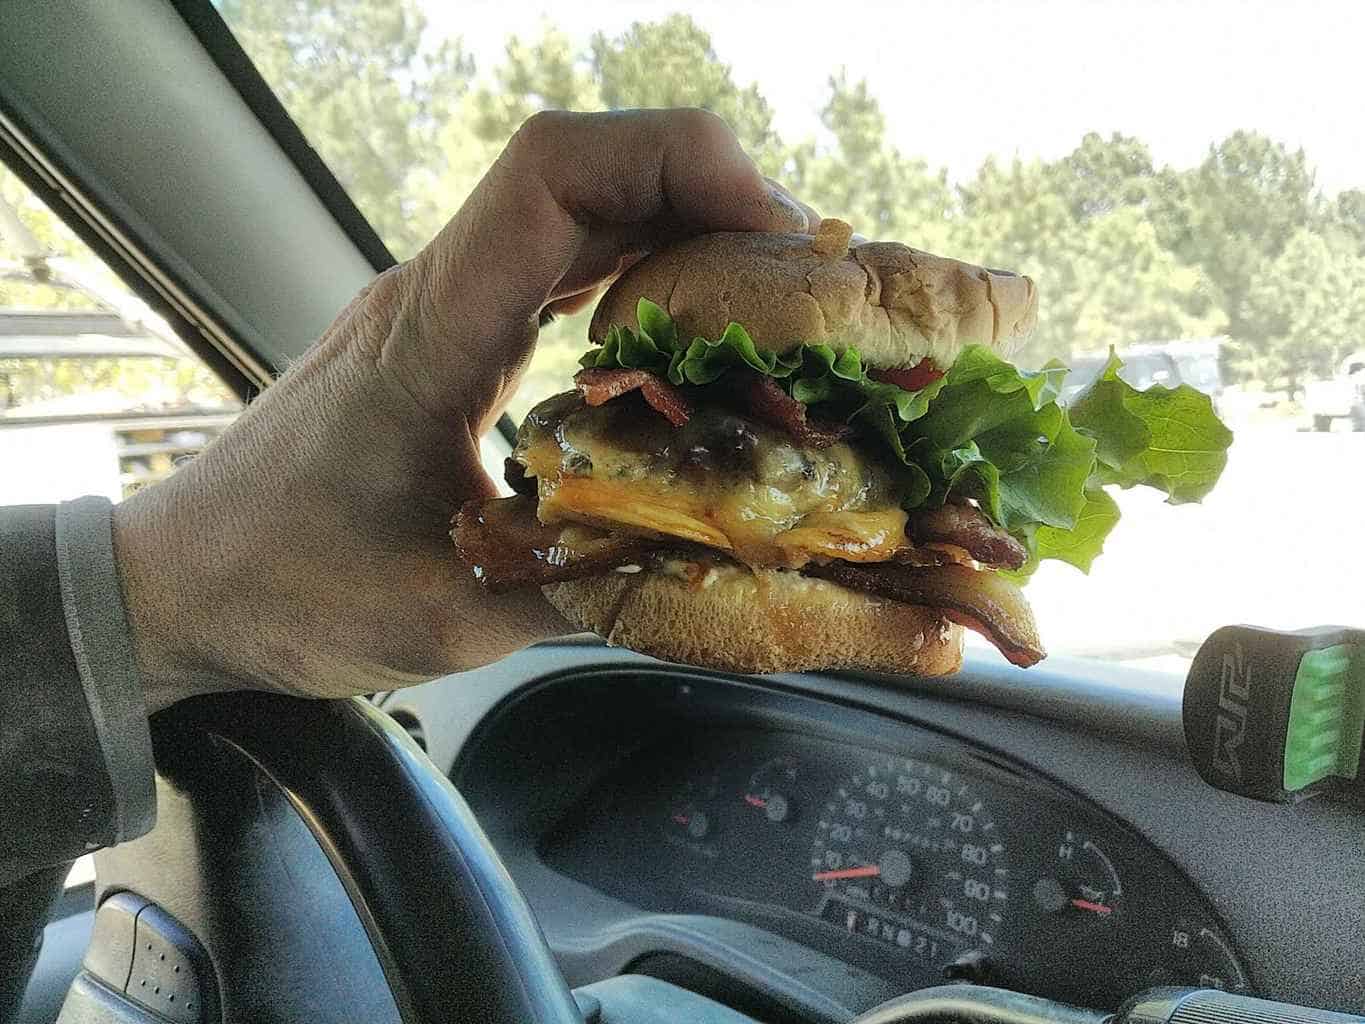 https://myersflooring.com/wp-content/uploads/2020/09/hotlogic-mini-cheeseburger.jpg